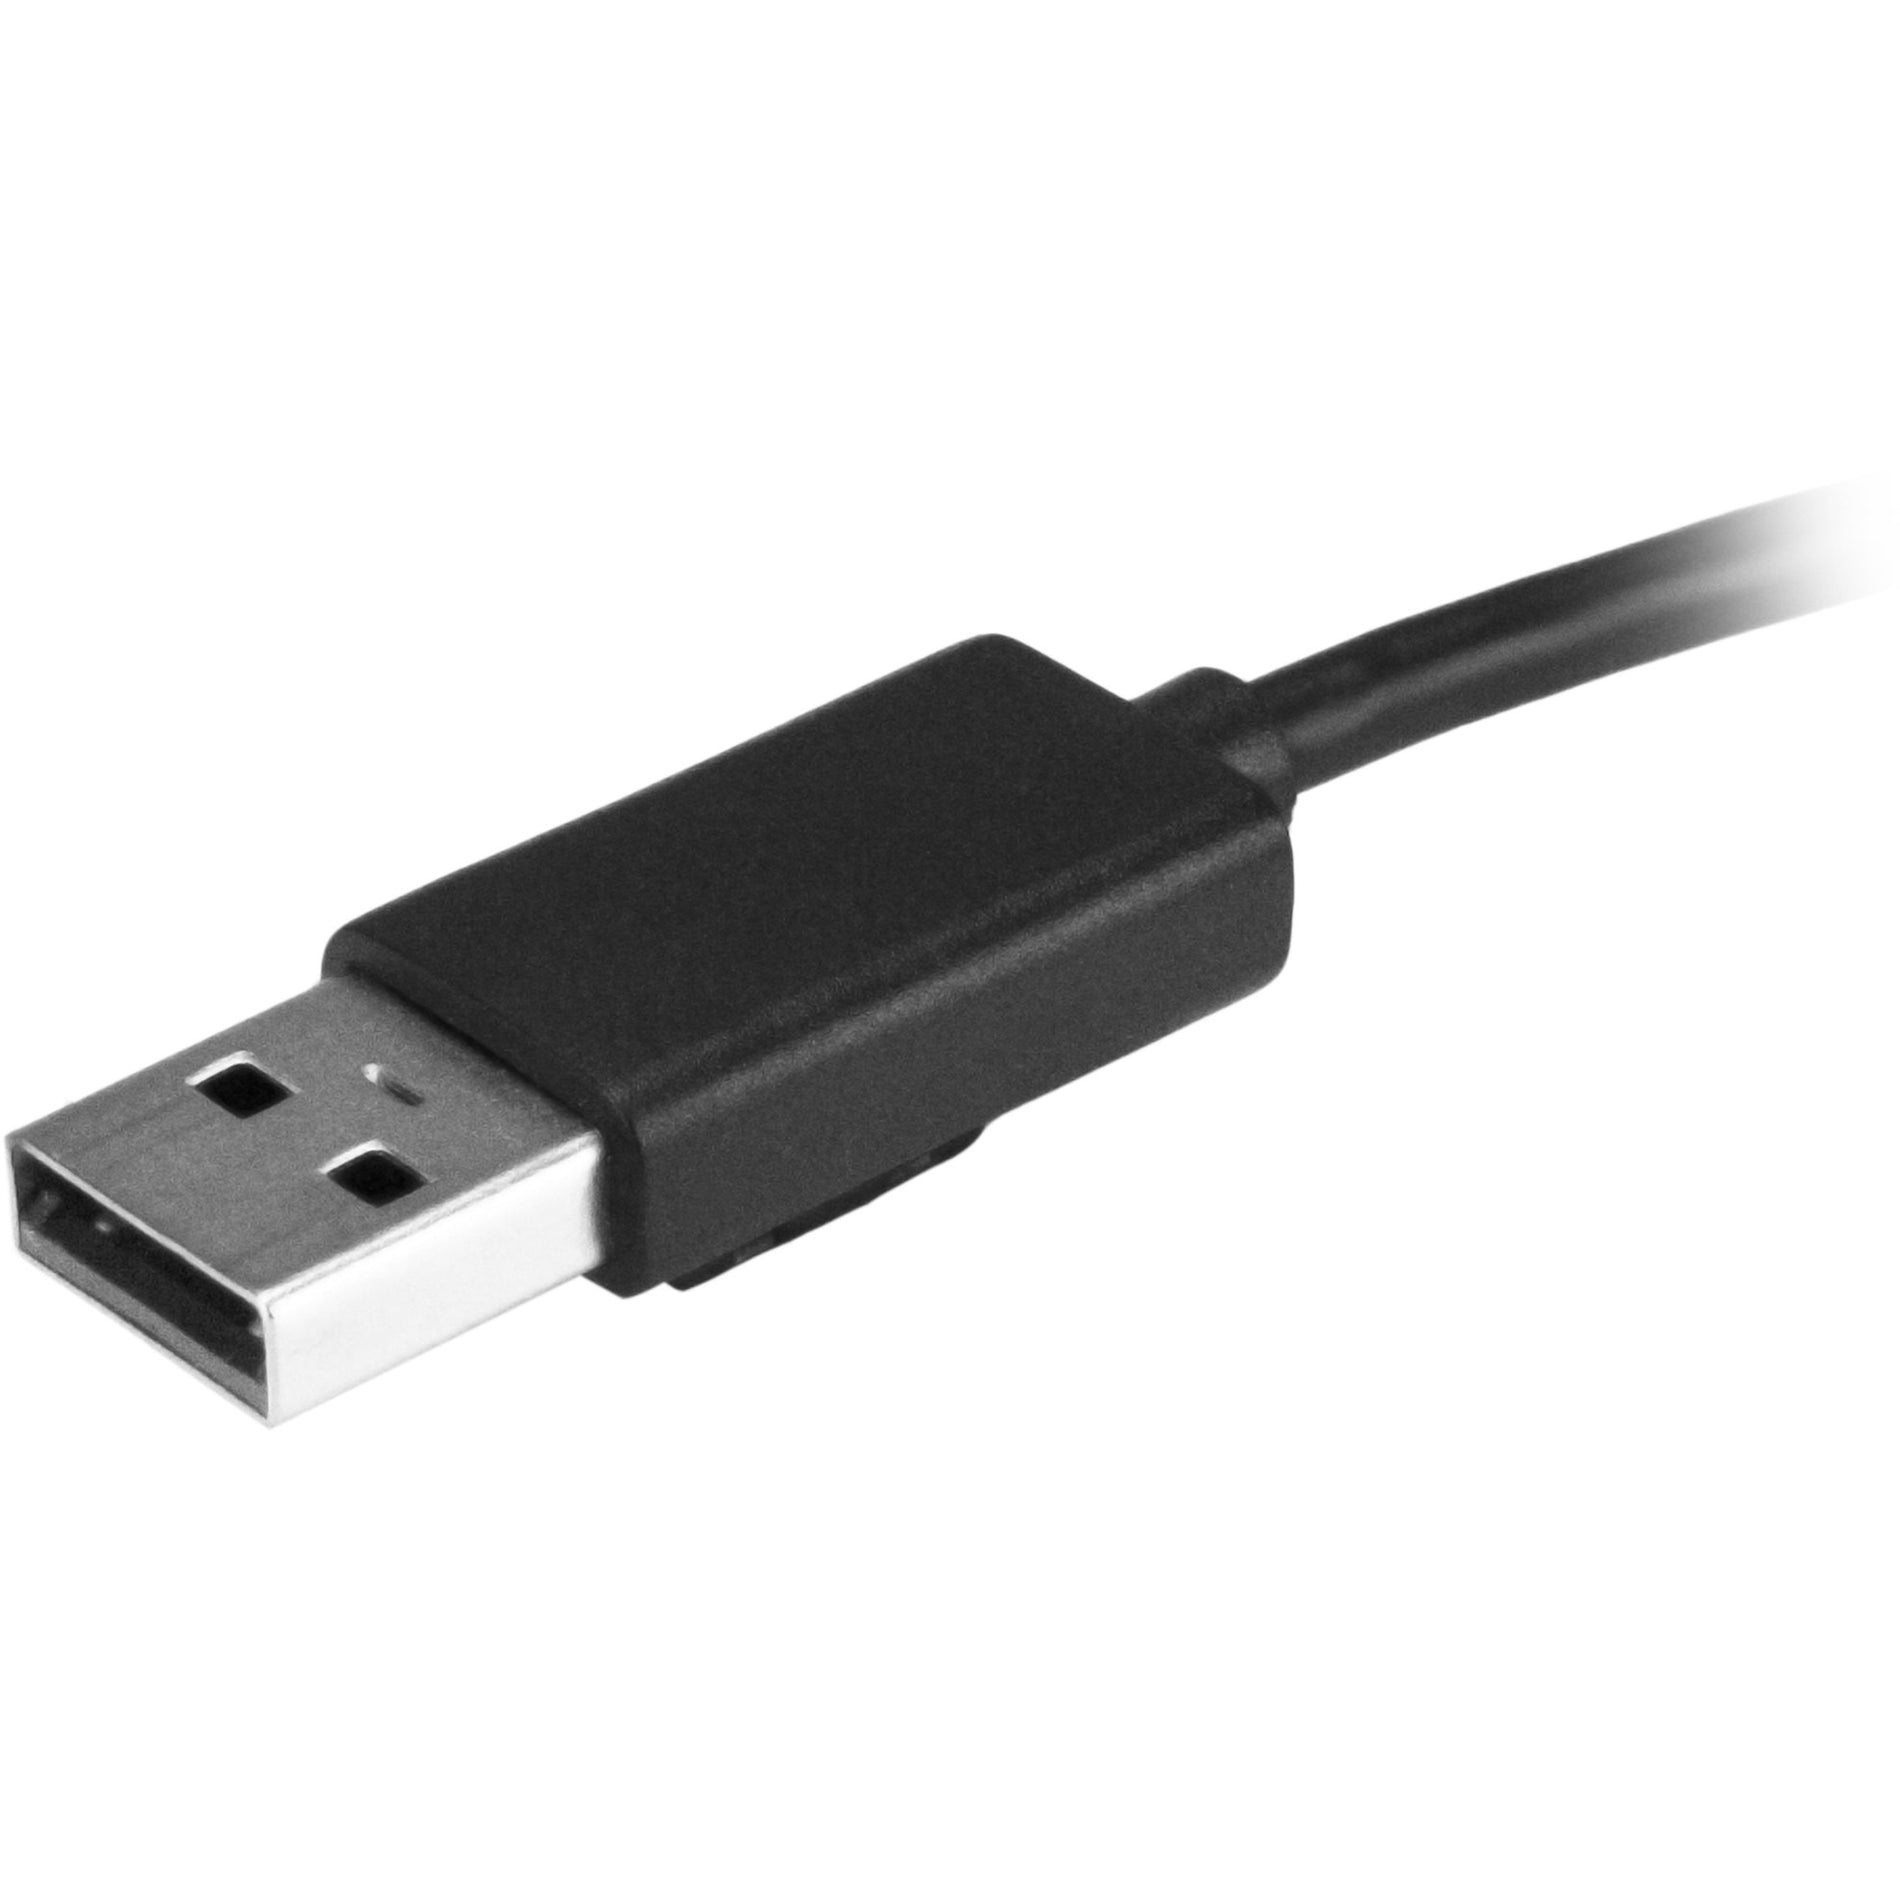 StarTech.com ST4200MINI2 4 Port Portable USB 2.0 Hub with Built-in Cable, Compact Mini USB Hub